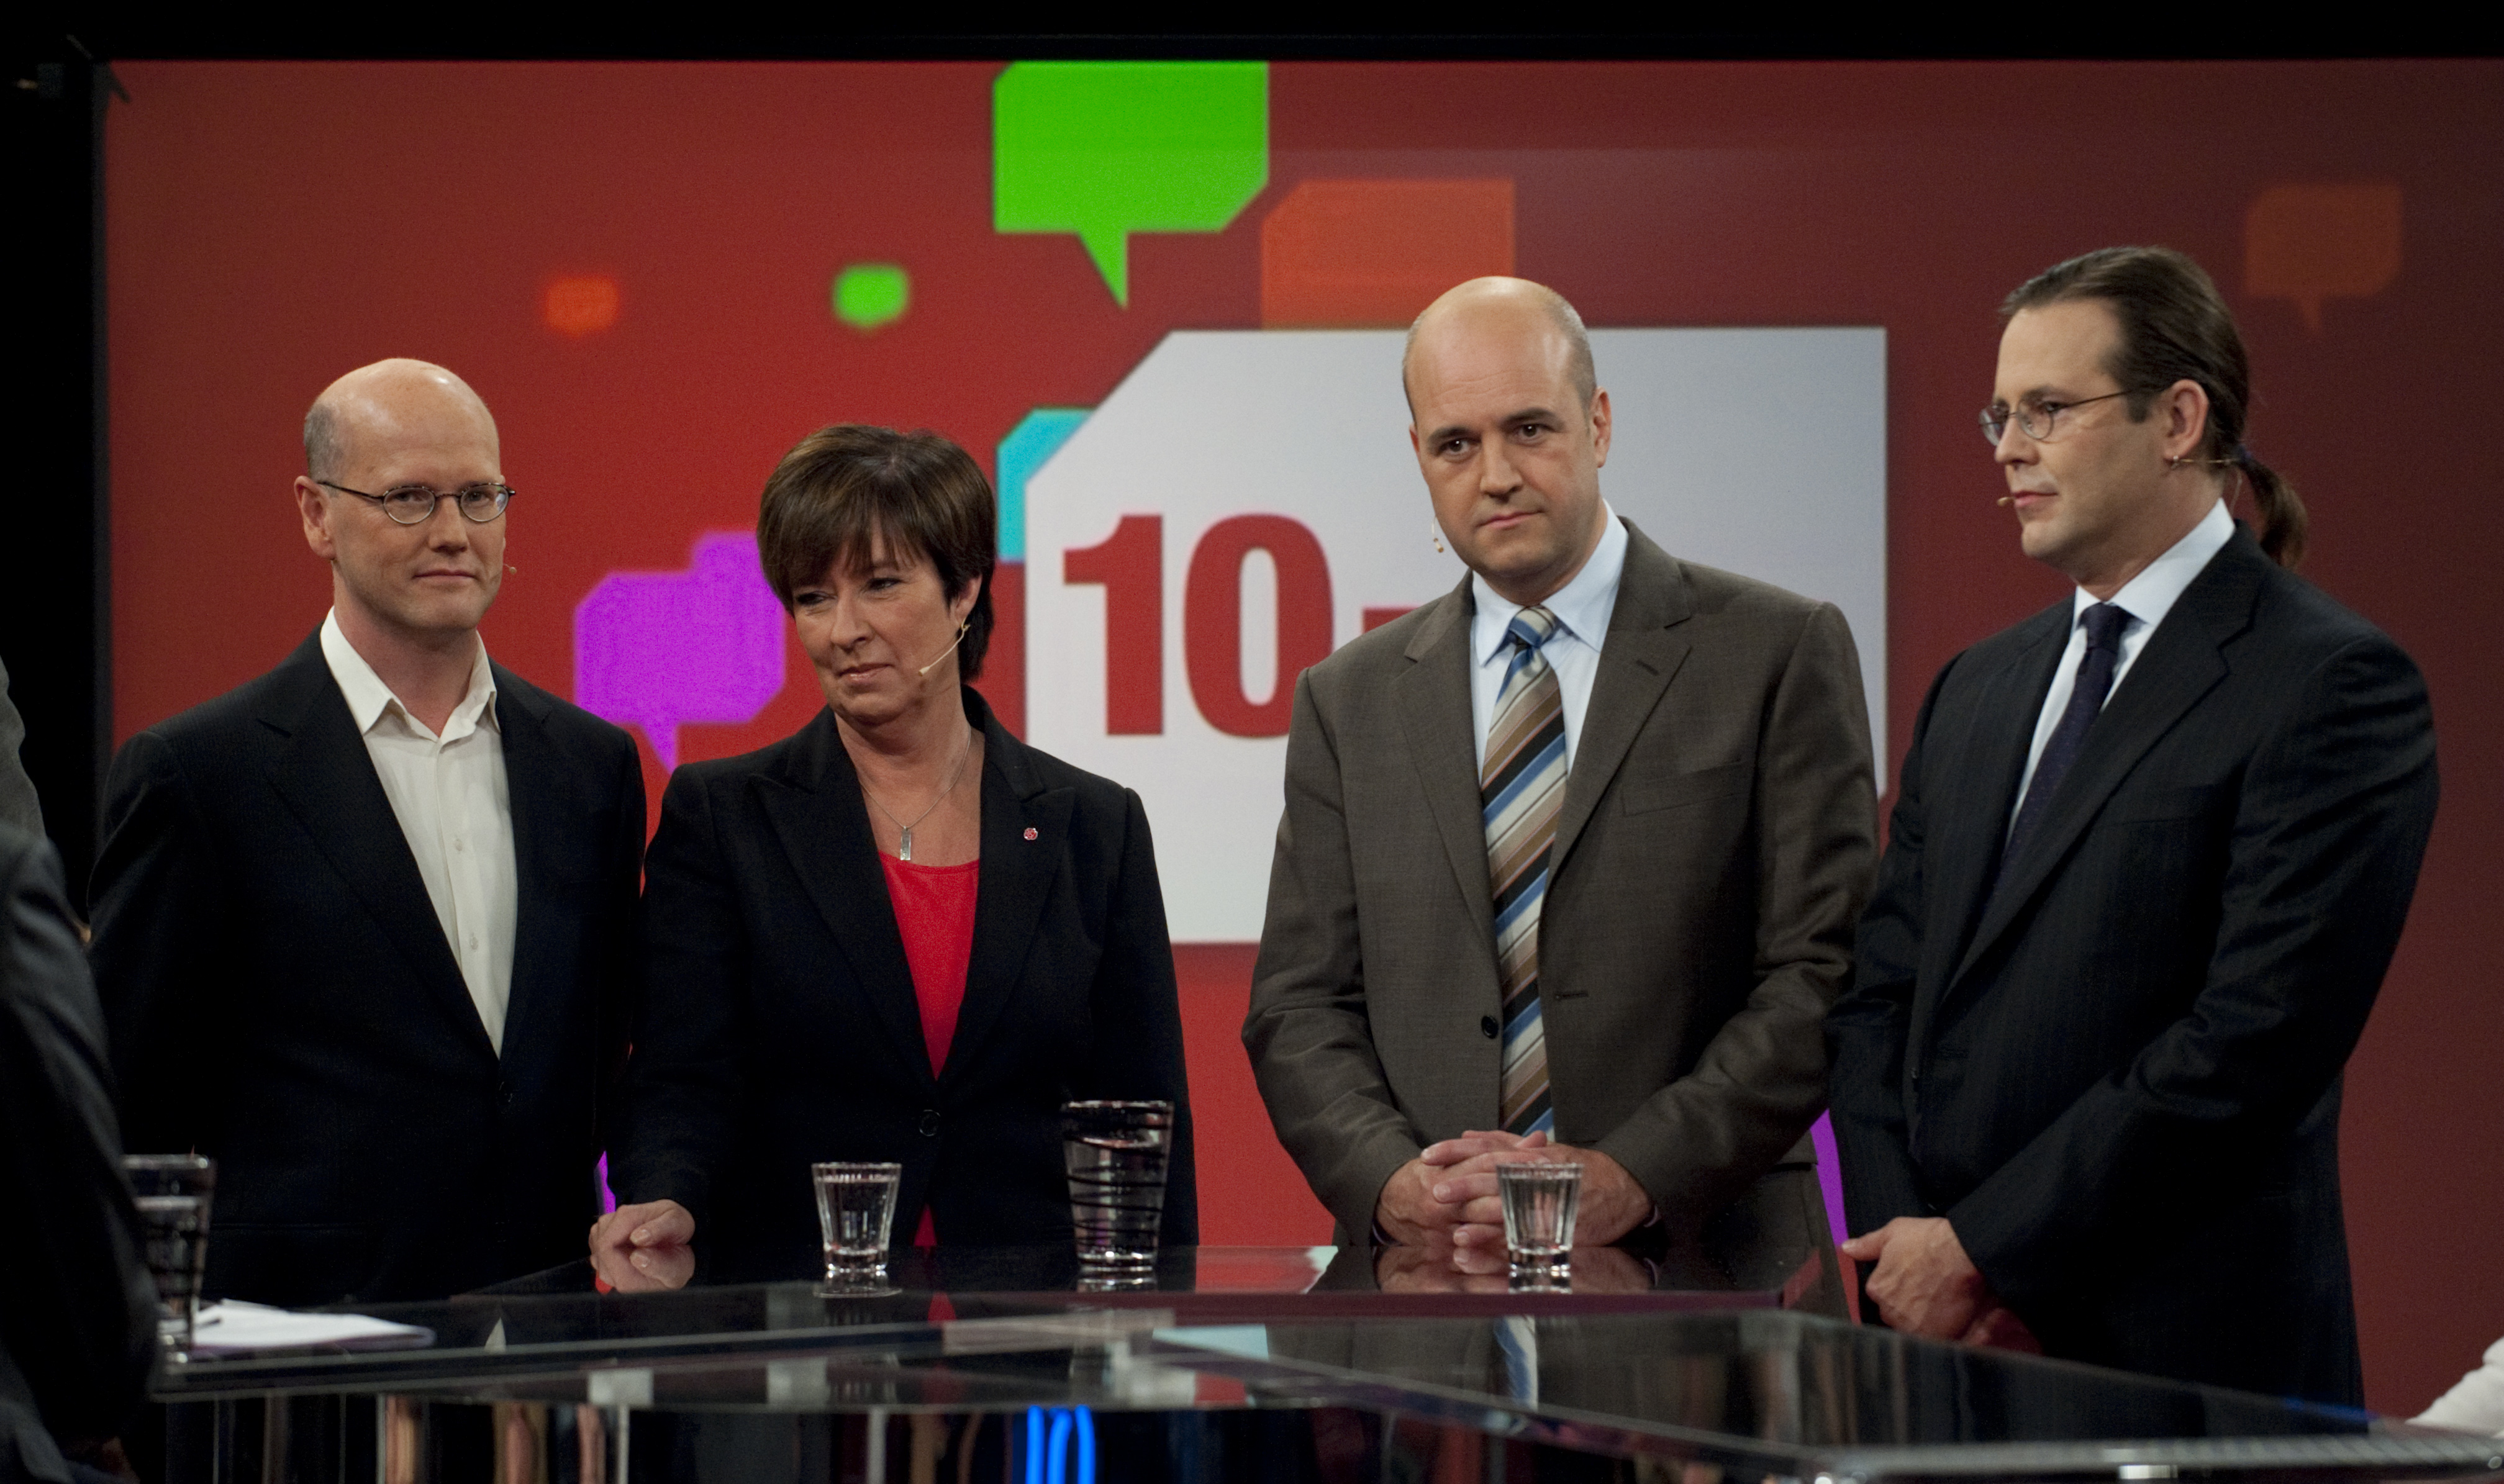 Fredrik Reinfeldt, Riksdagsvalet 2010, TV4, Lennart Ekdal, Lennart Ekdahl, Kvällsöppet, Partiledardebatt, Moderaterna, Socialdemokraterna, Mona Sahlin